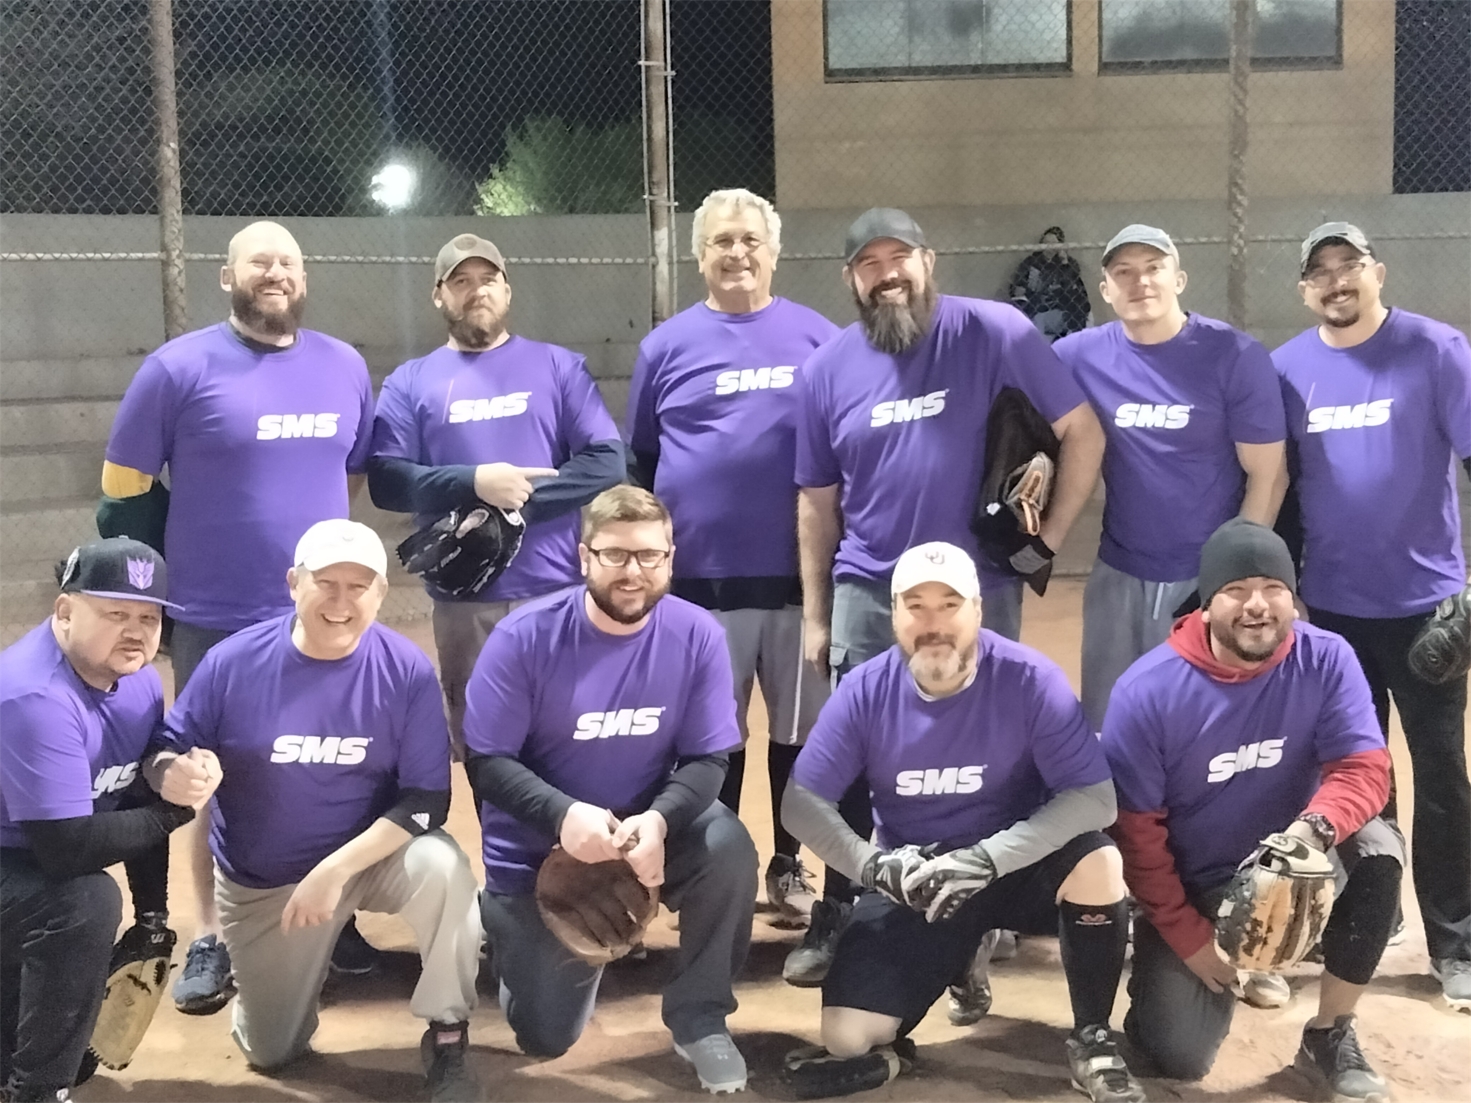 SMS Kirtland Softball Team in Albuquerque New Mexico.jpg